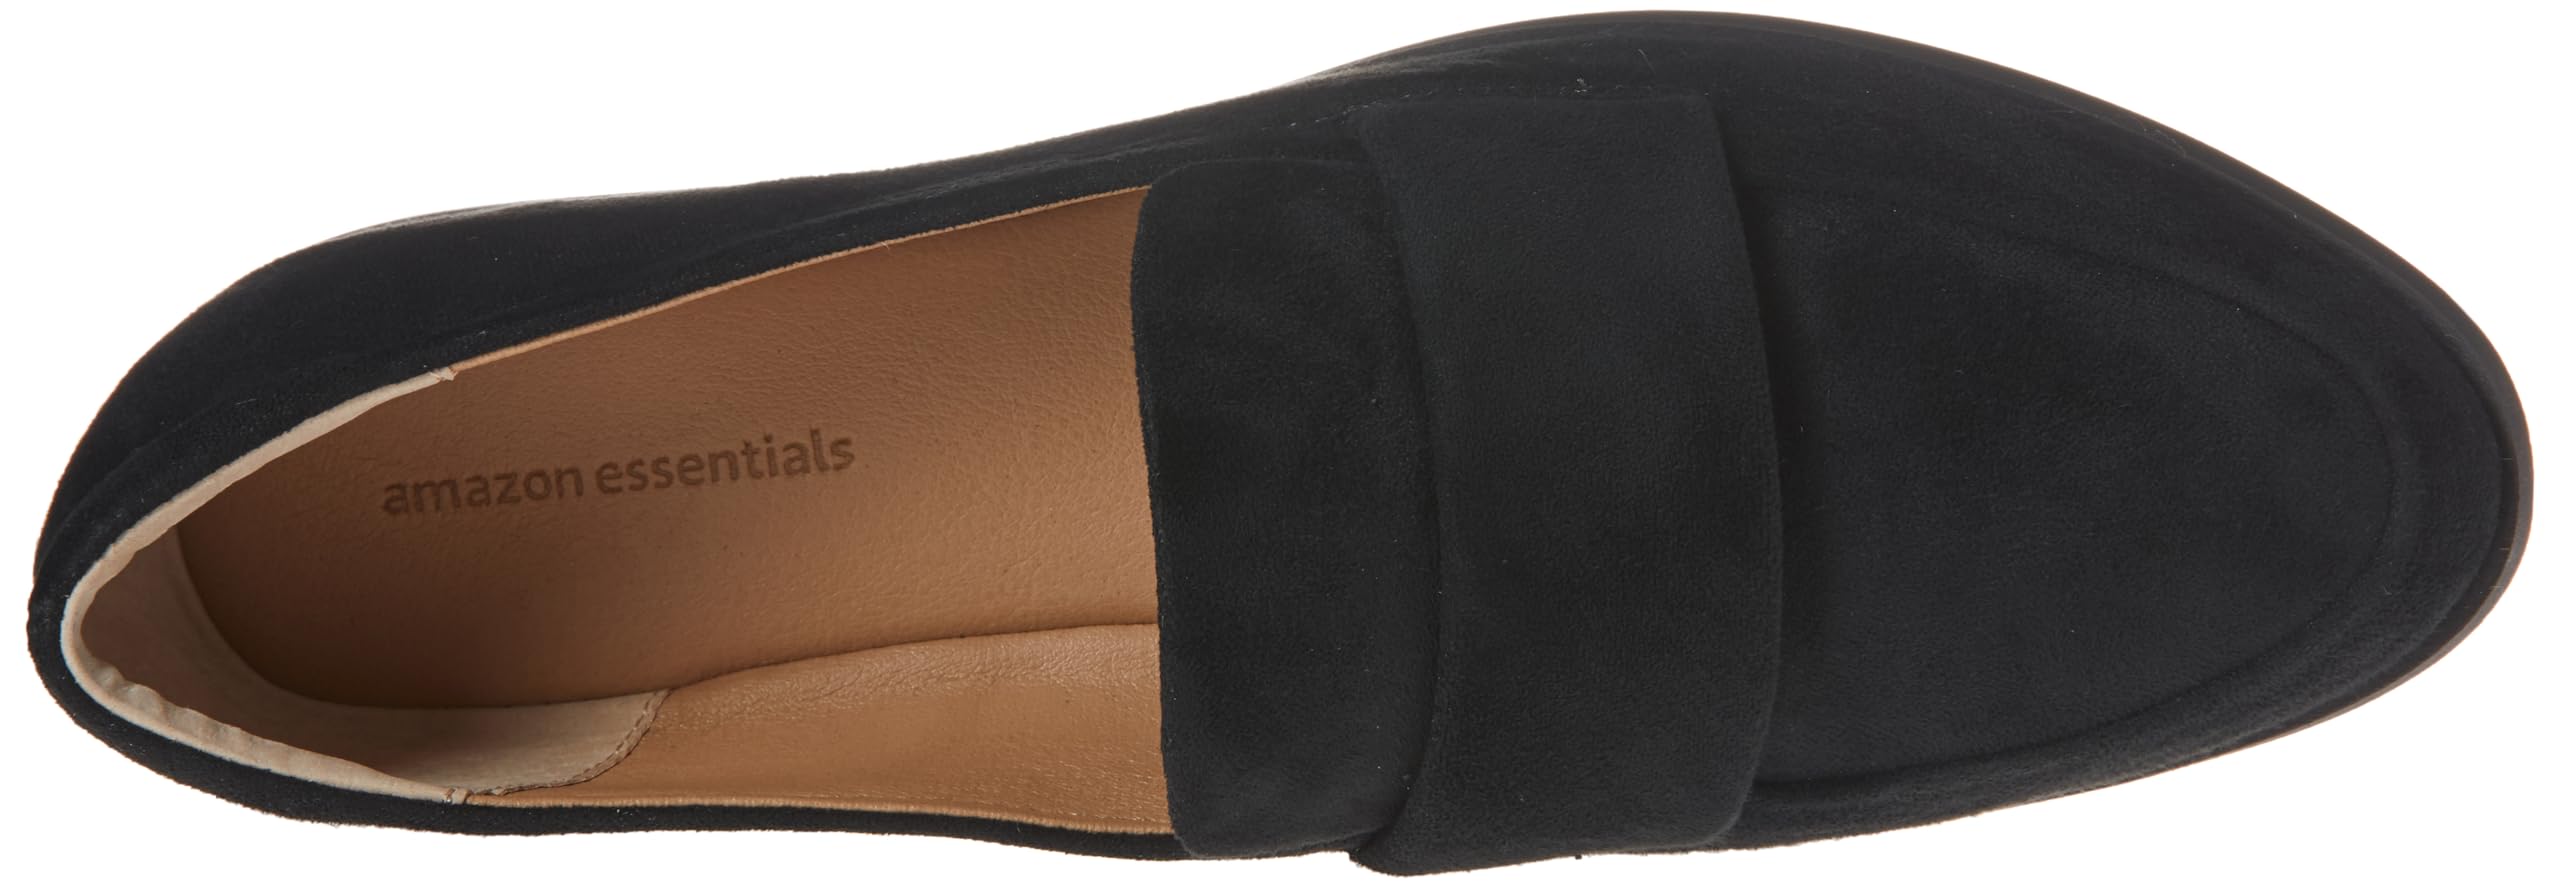 Amazon Essentials Women's Soft Moc Toe Loafer